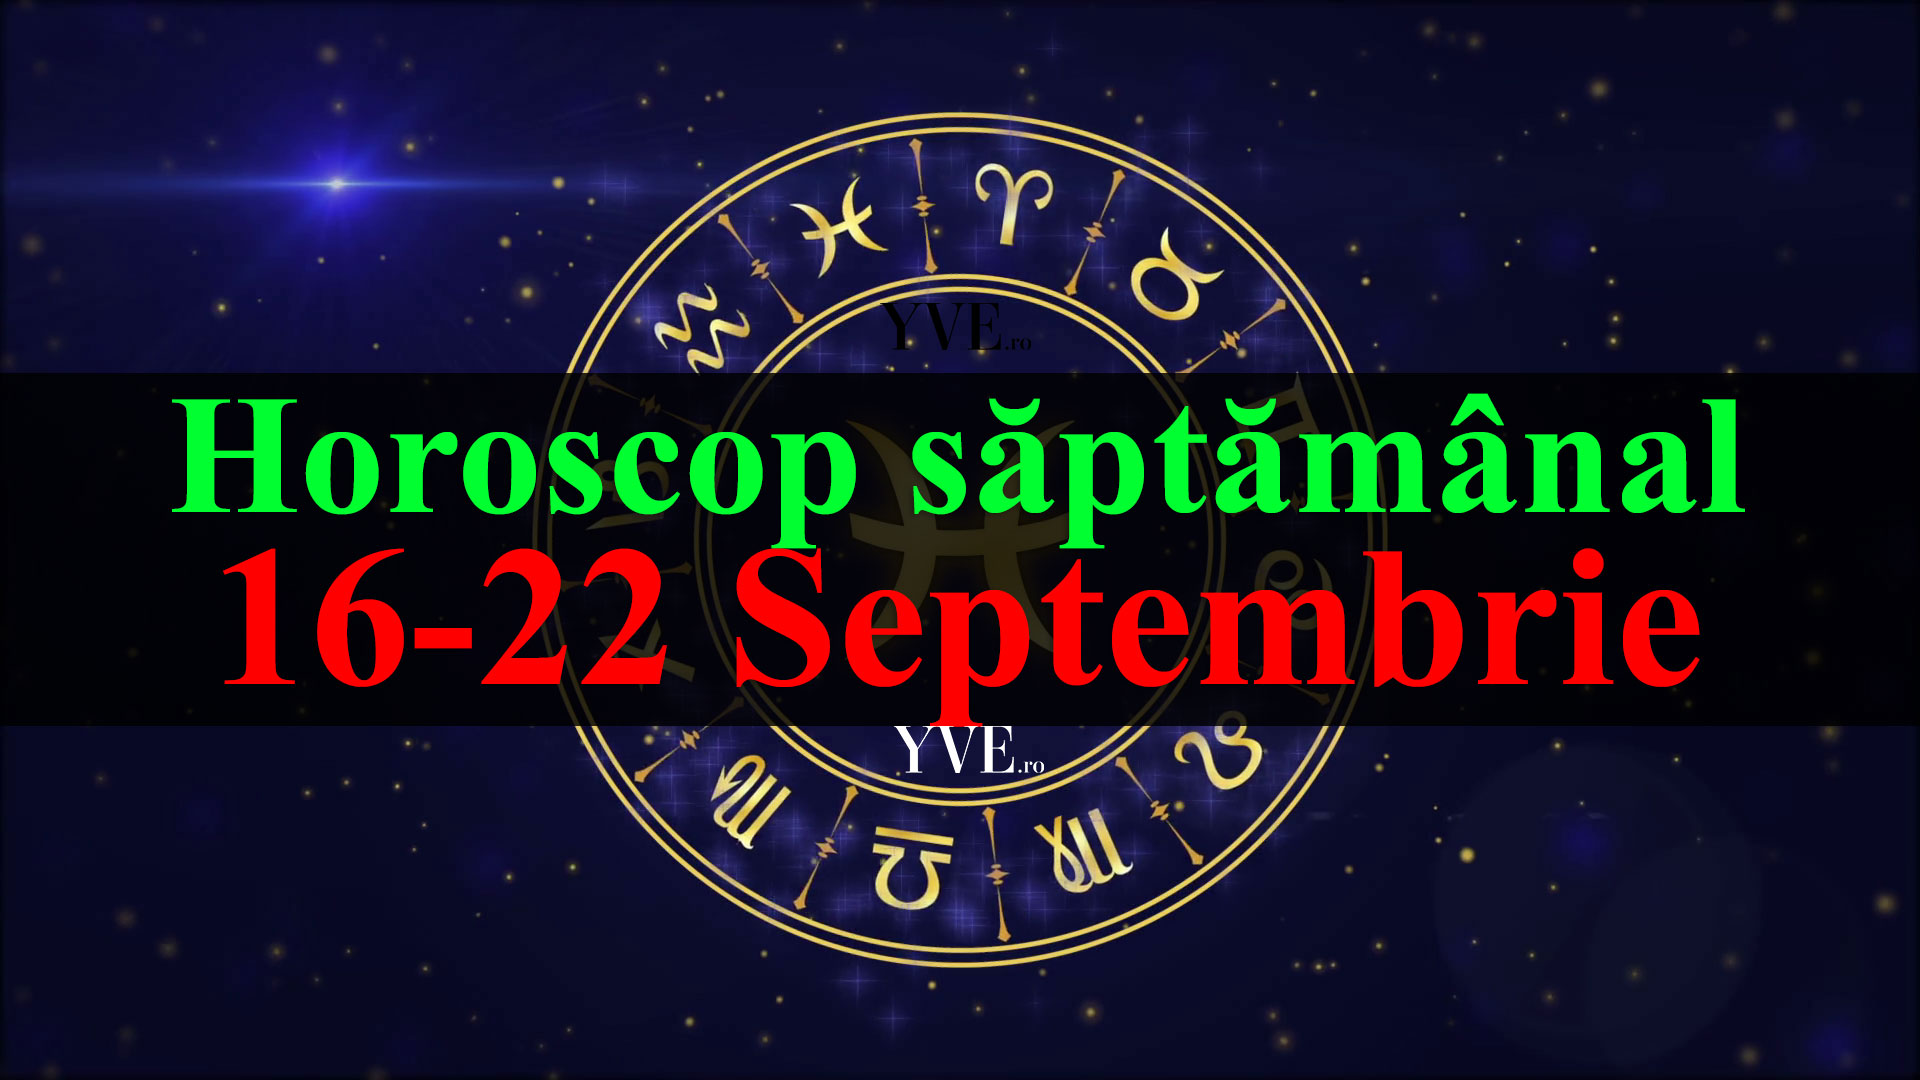 Horoscop saptamanal 16-22 Septembrie 2019